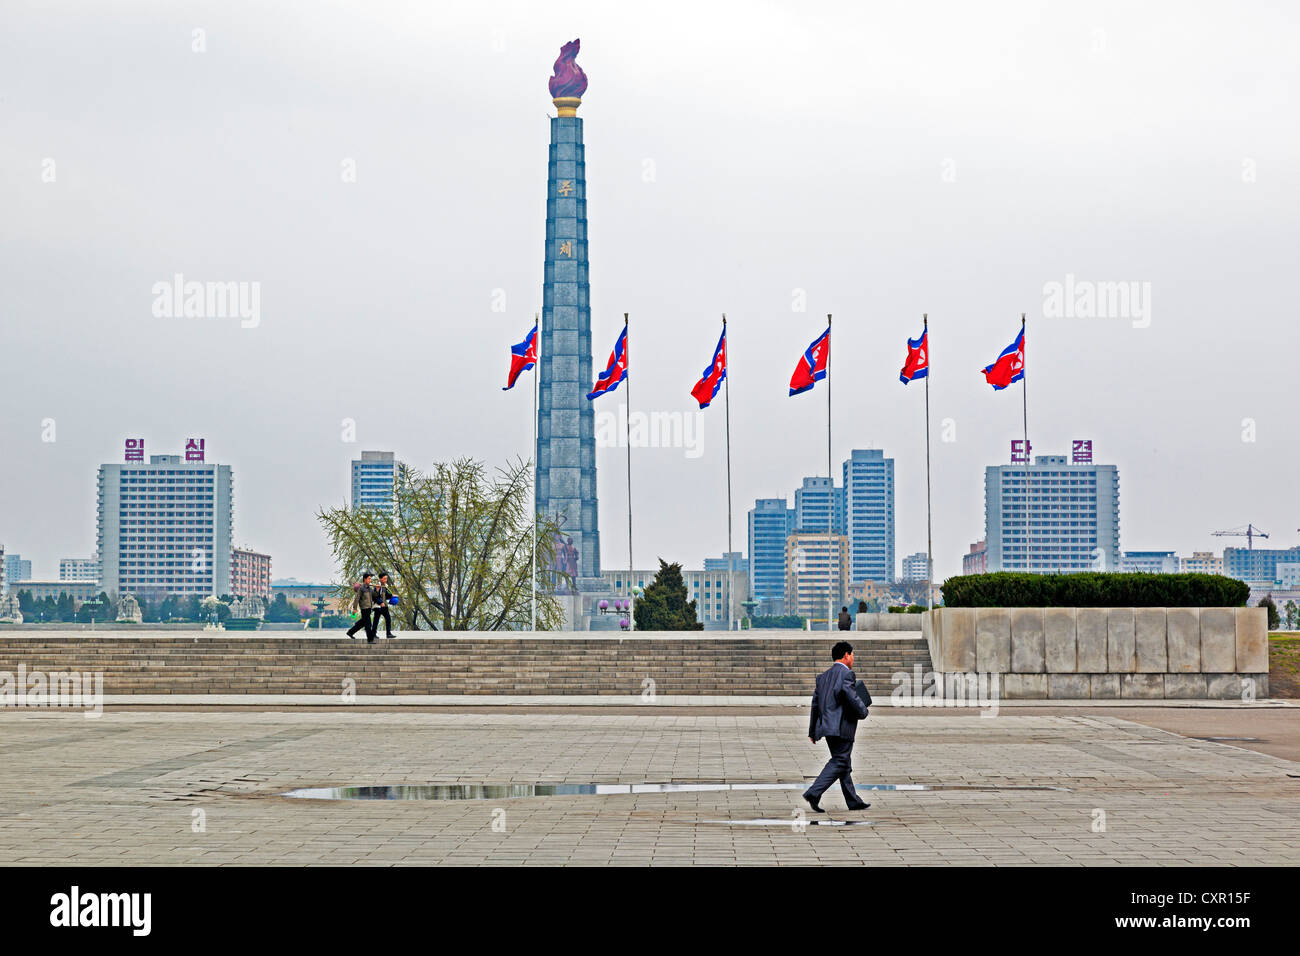 Democratic Peoples's Republic of Korea (DPRK), North Korea, Pyongyang, Juche Tower and the Taedong river Stock Photo